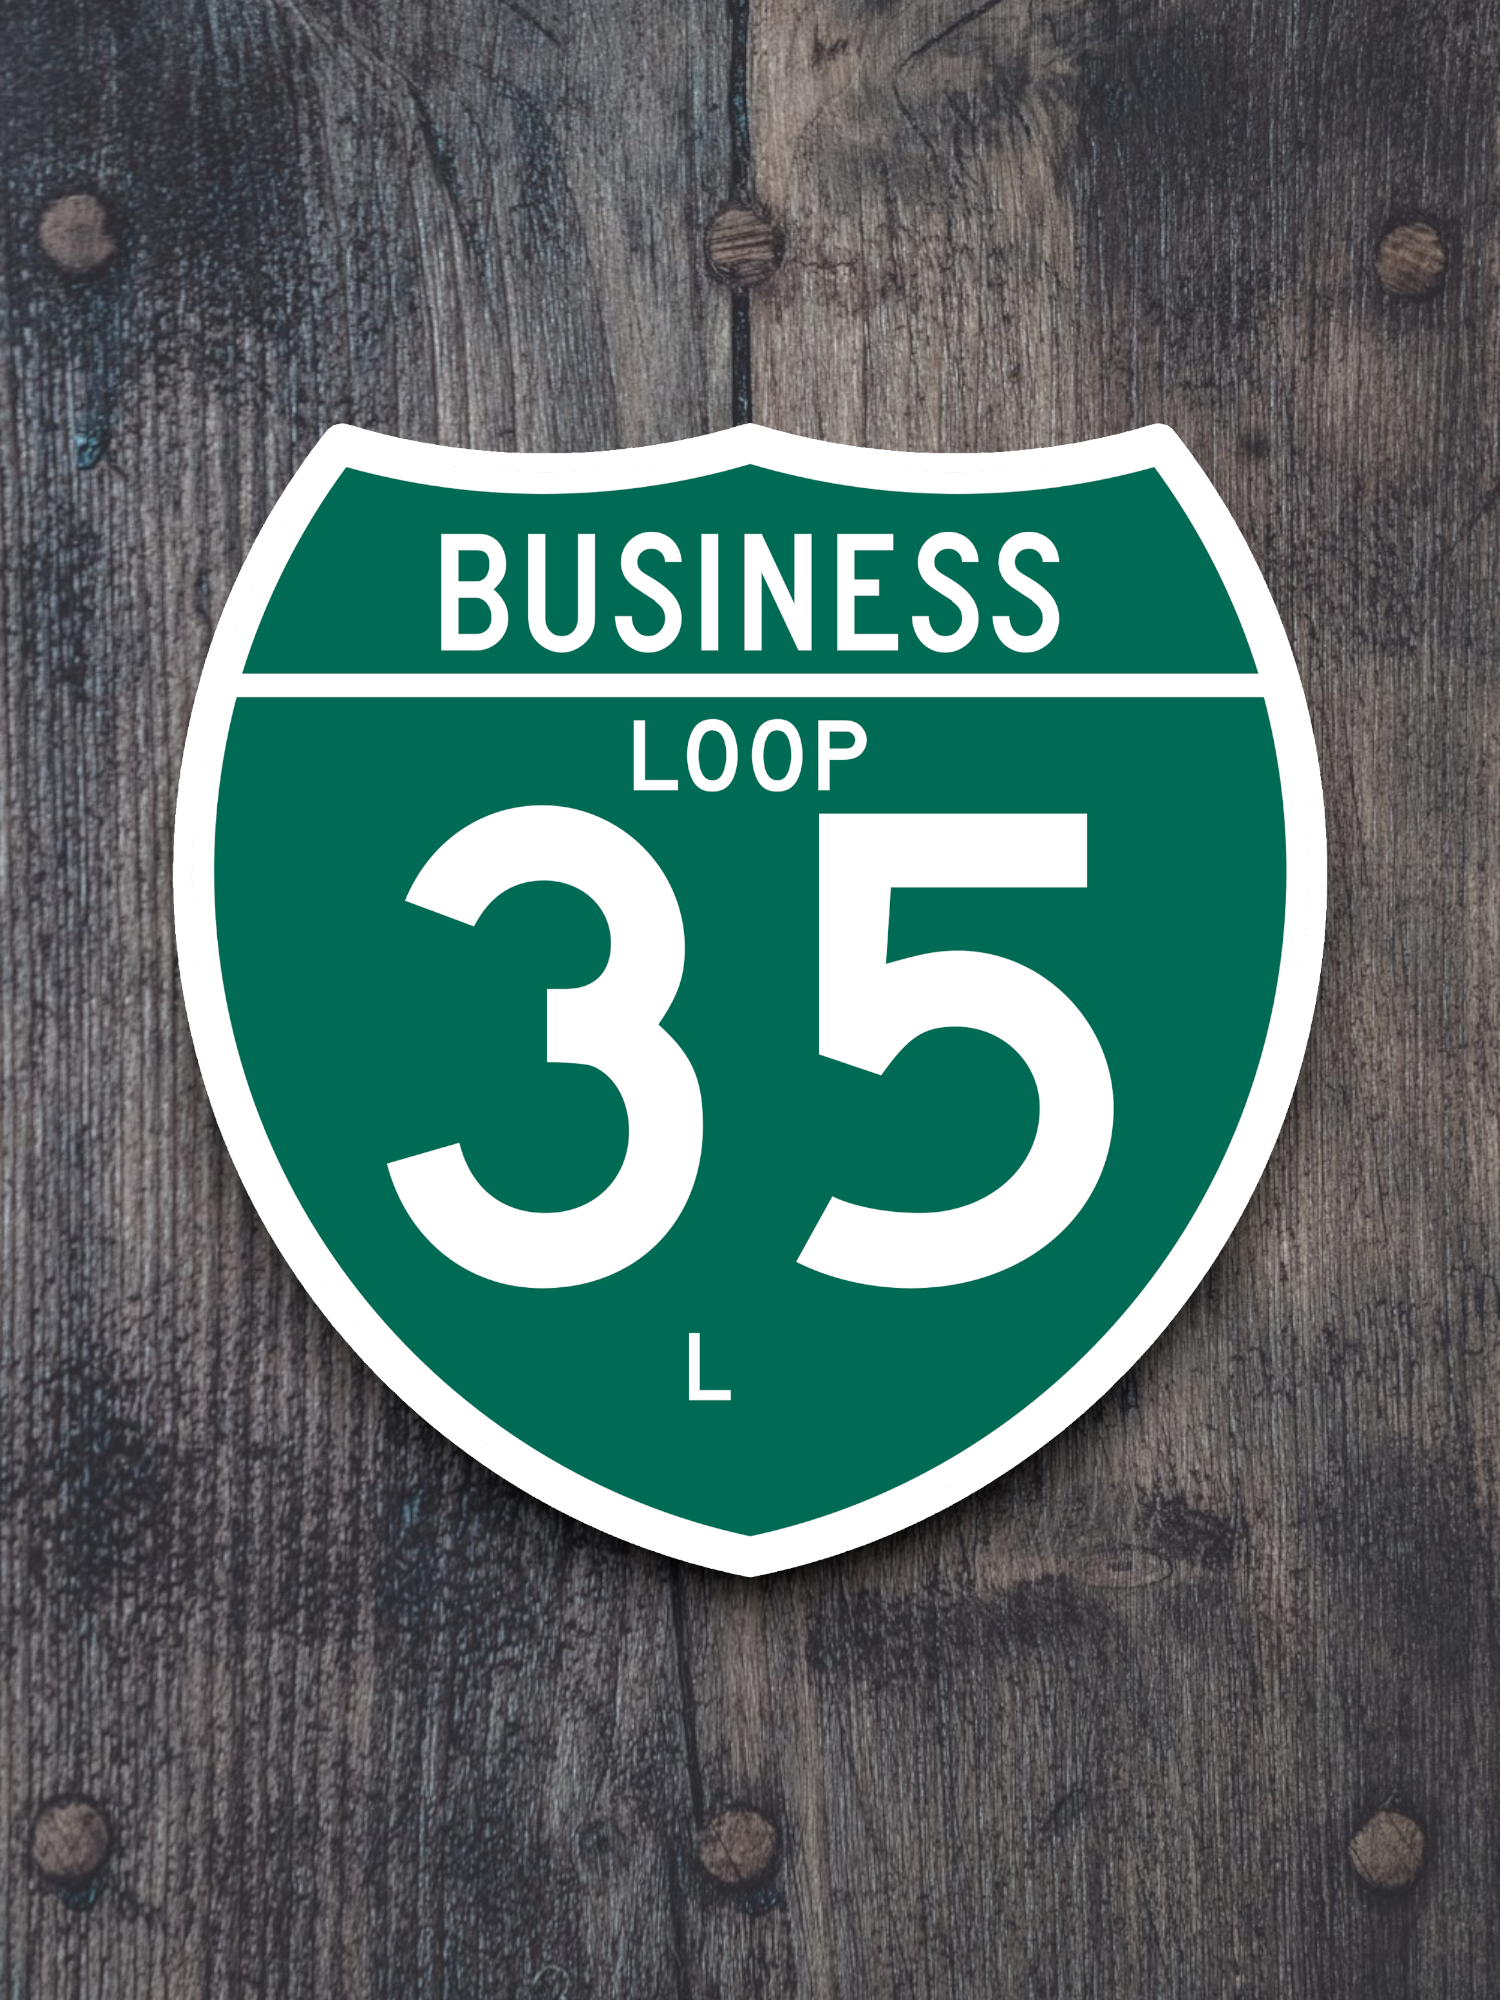 Business Spur Interstate 35-L Texas Road Sign Sticker